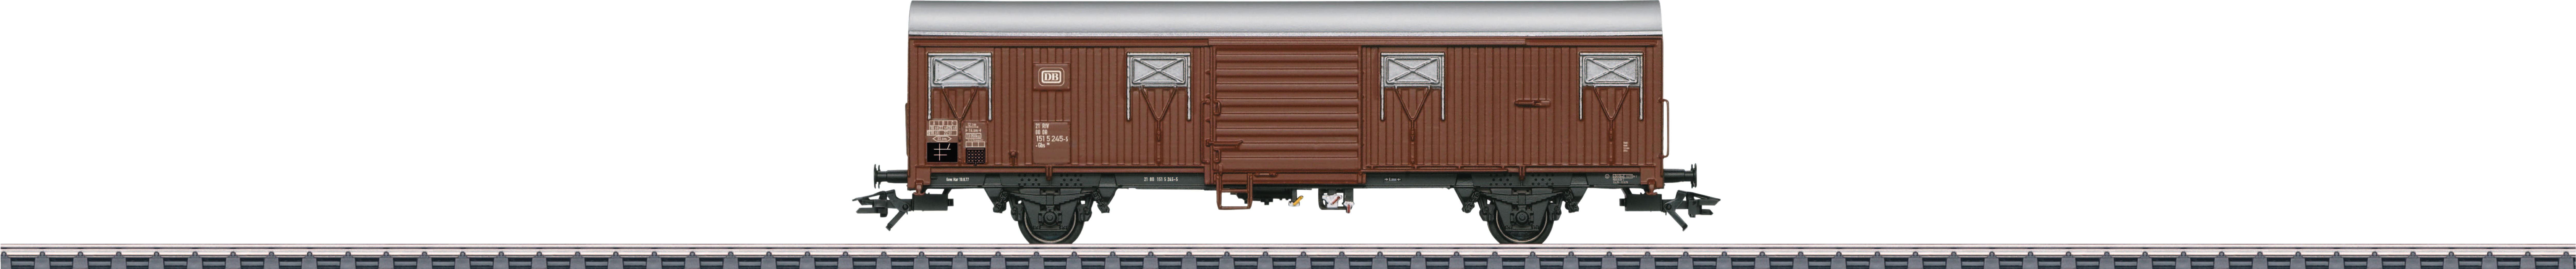 Märklin Güterwagen »Spundwandwagen Gbs 256 - 47311«